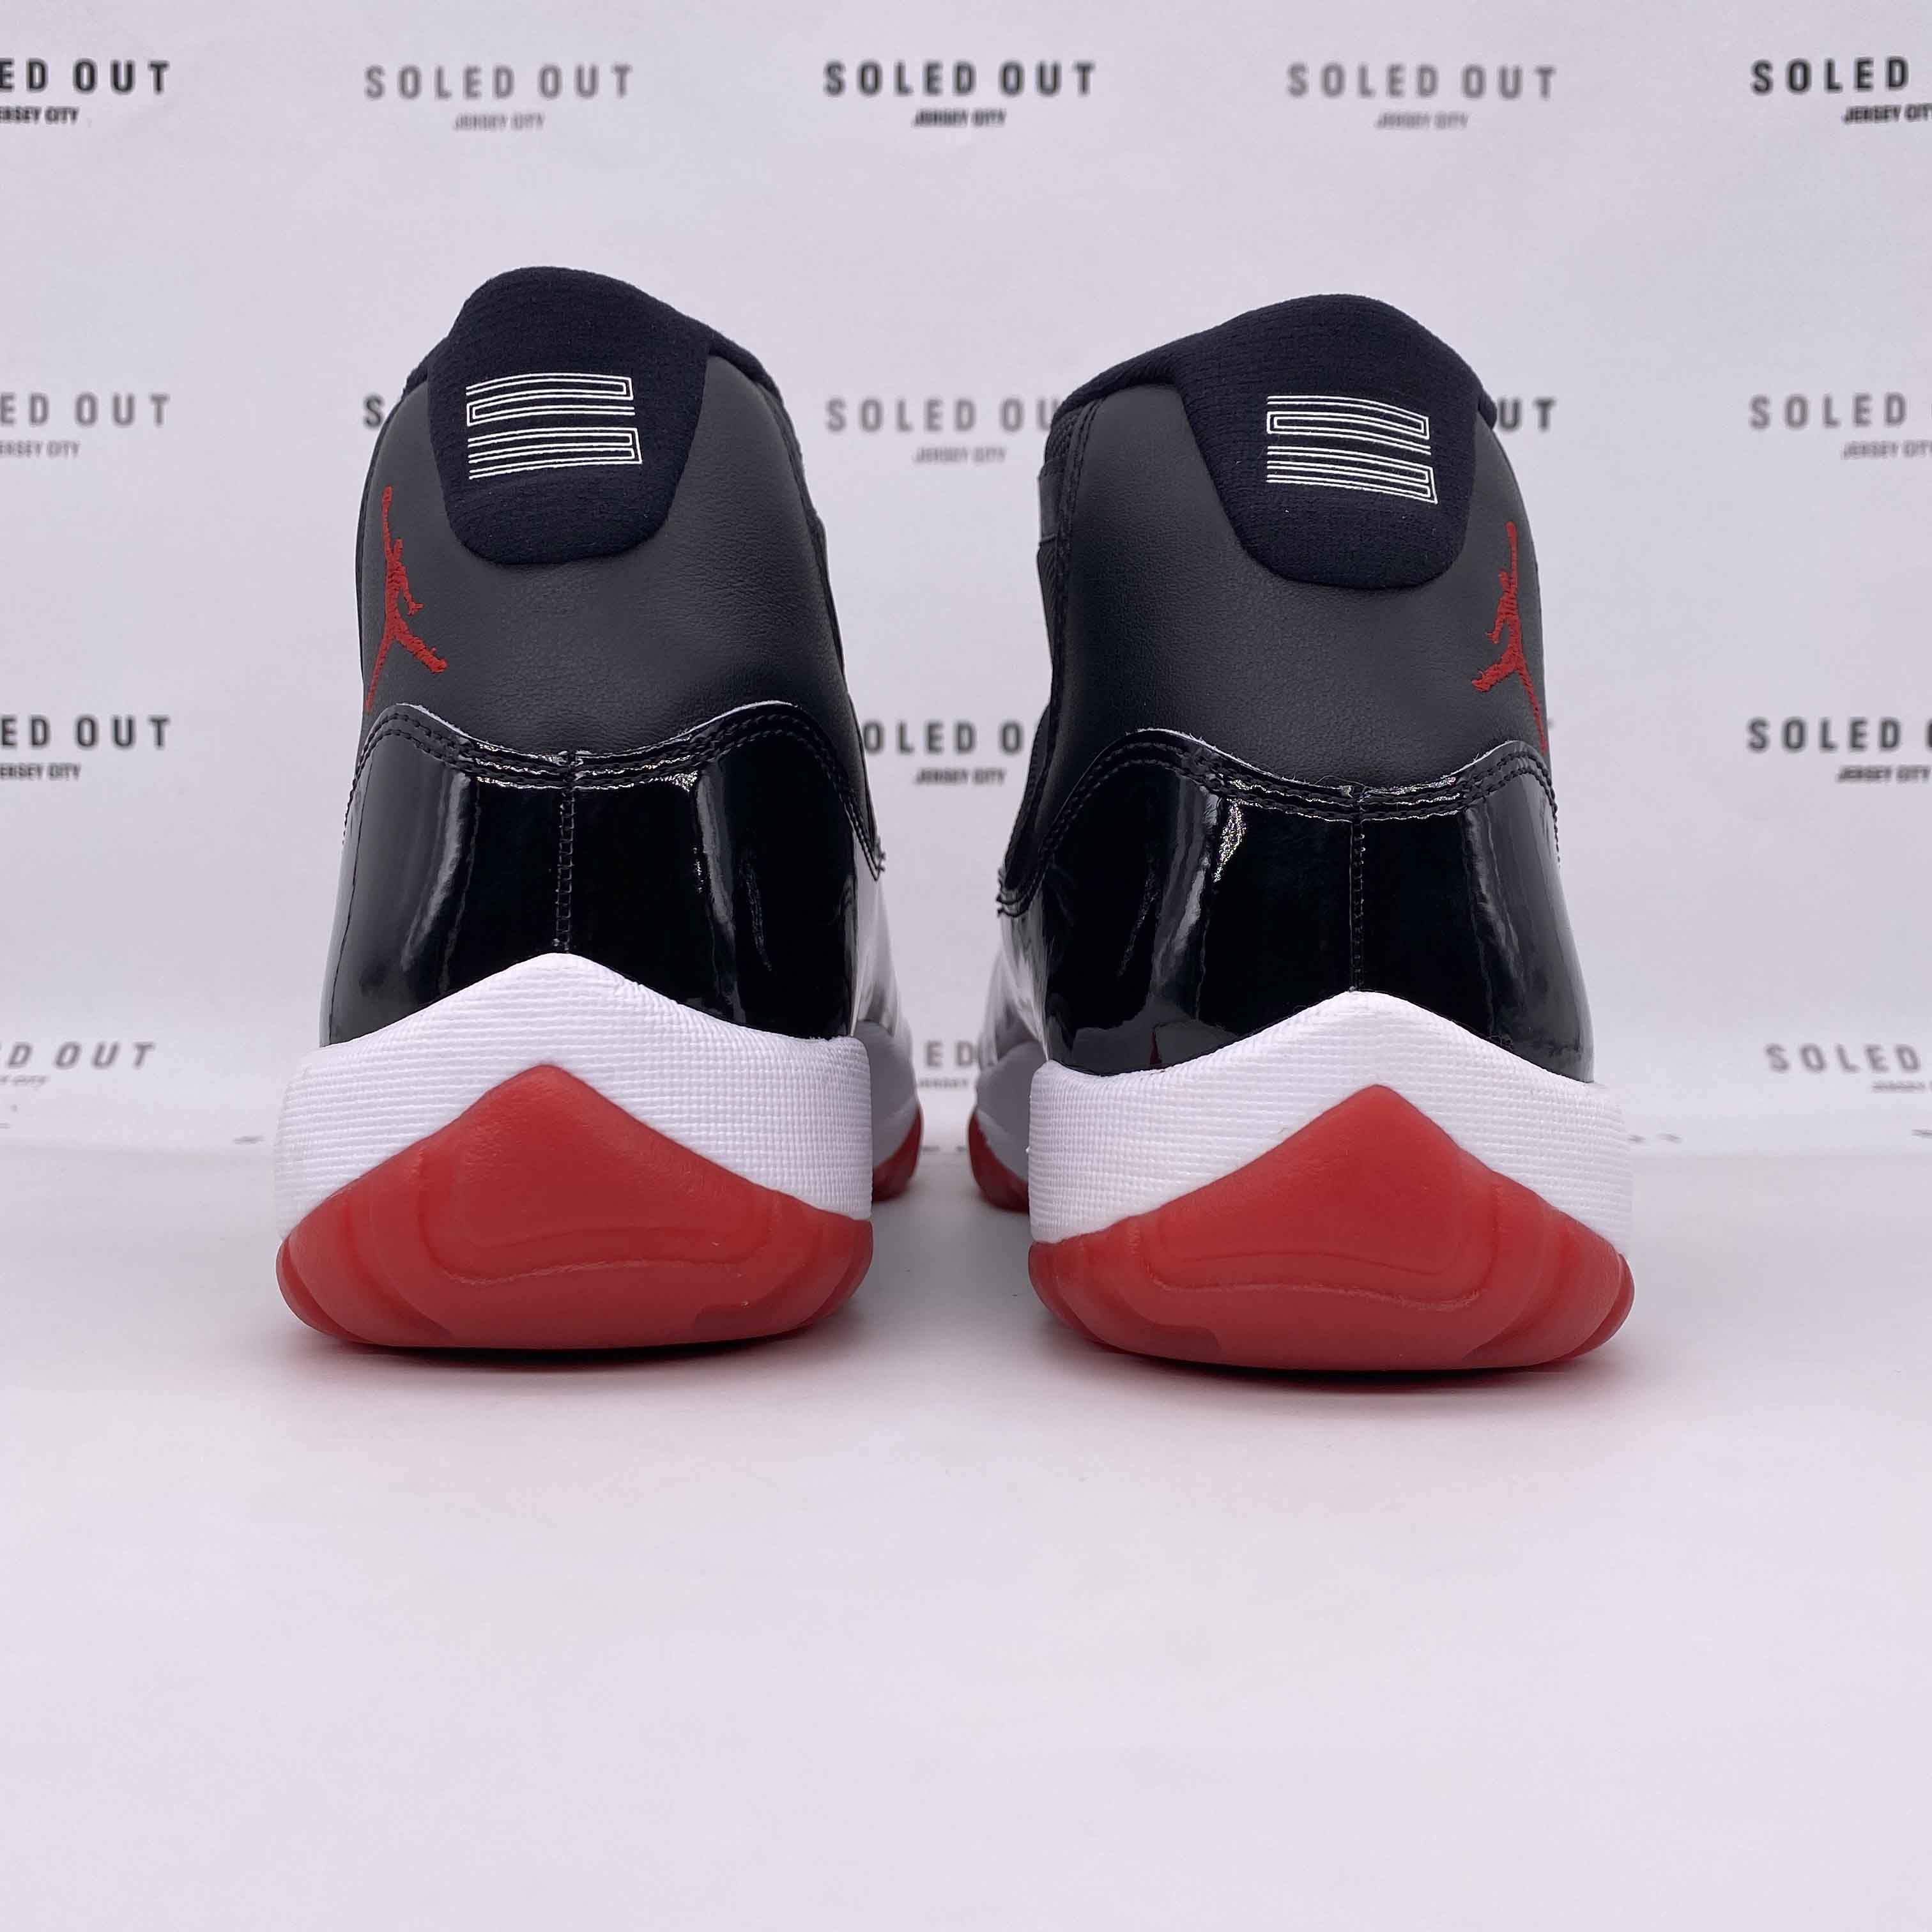 Air Jordan 11 Retro "Bred" 2019 New Size 13